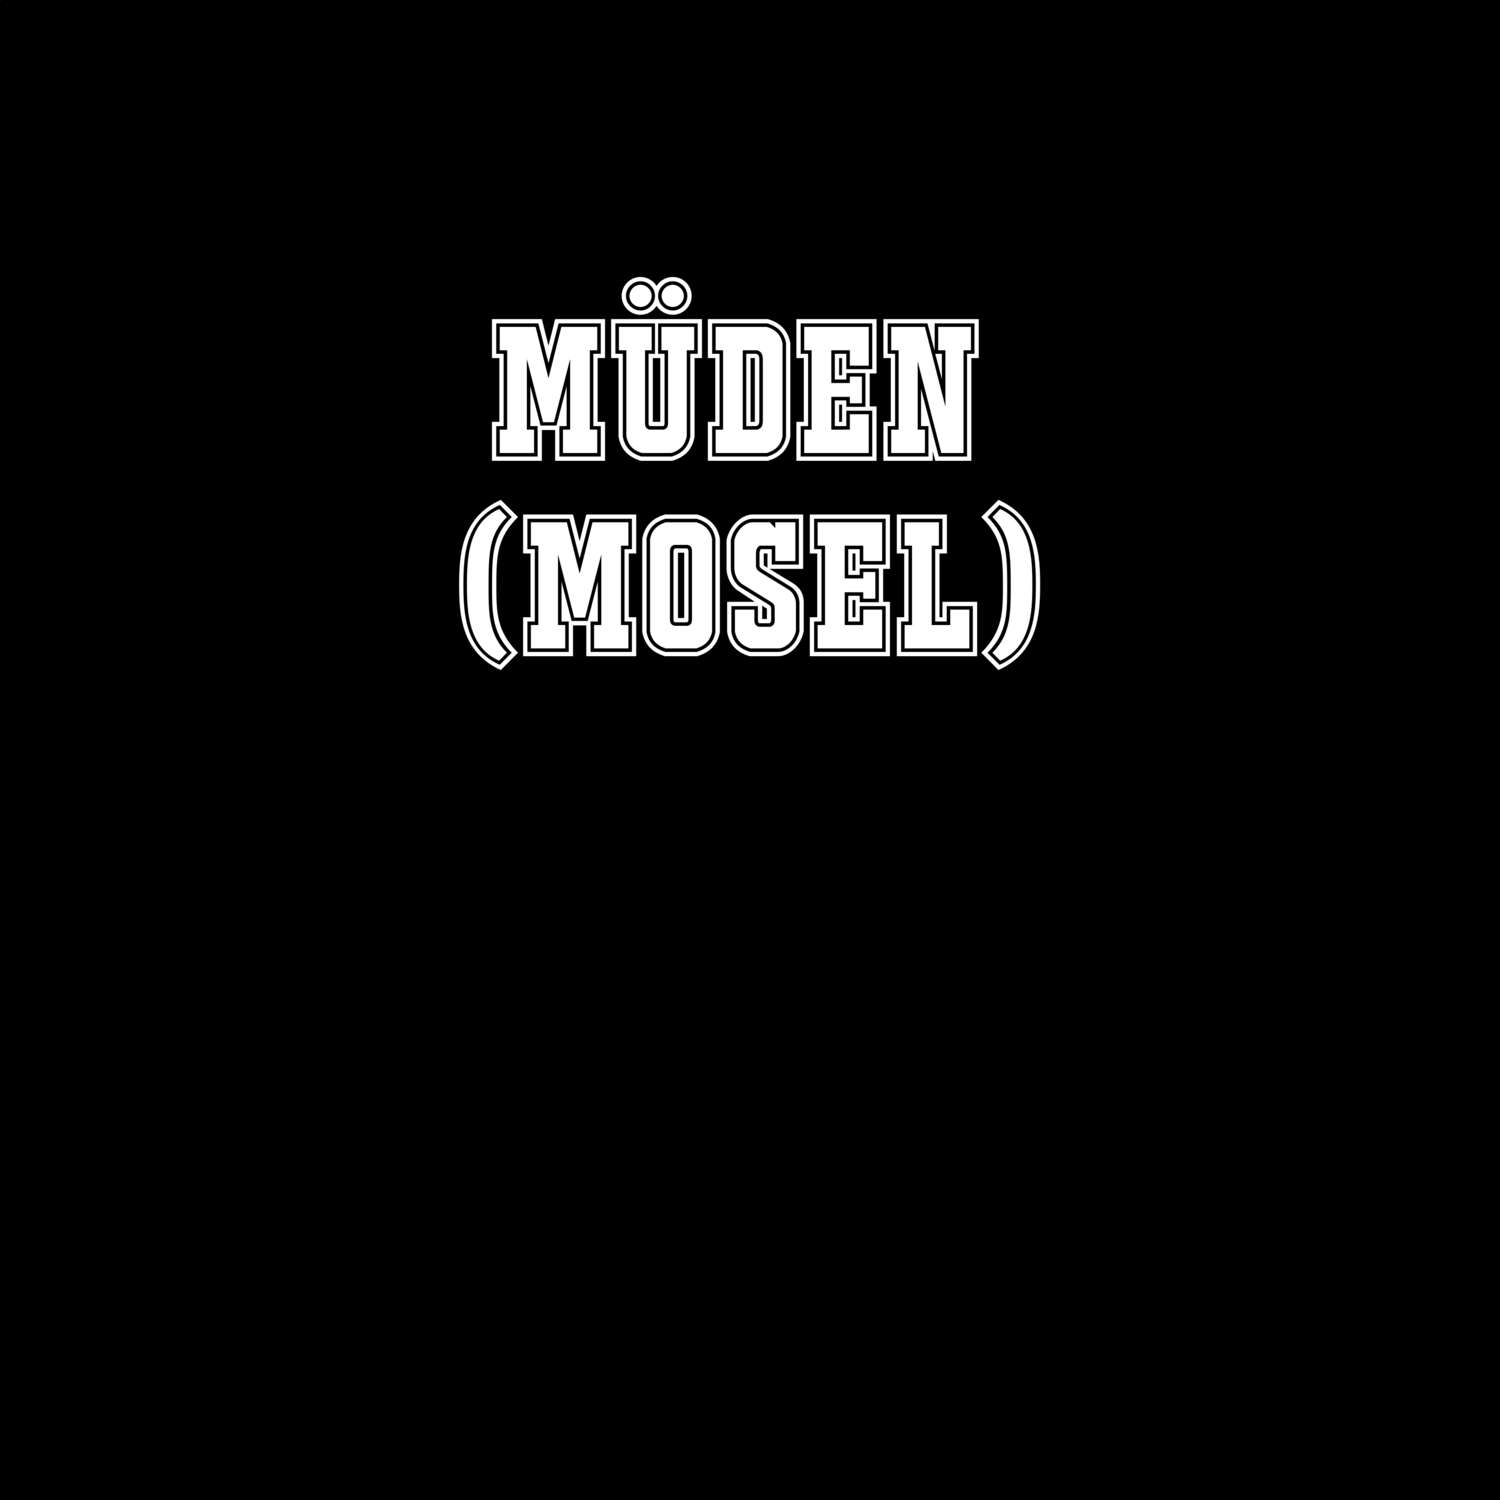 Müden (Mosel) T-Shirt »Classic«